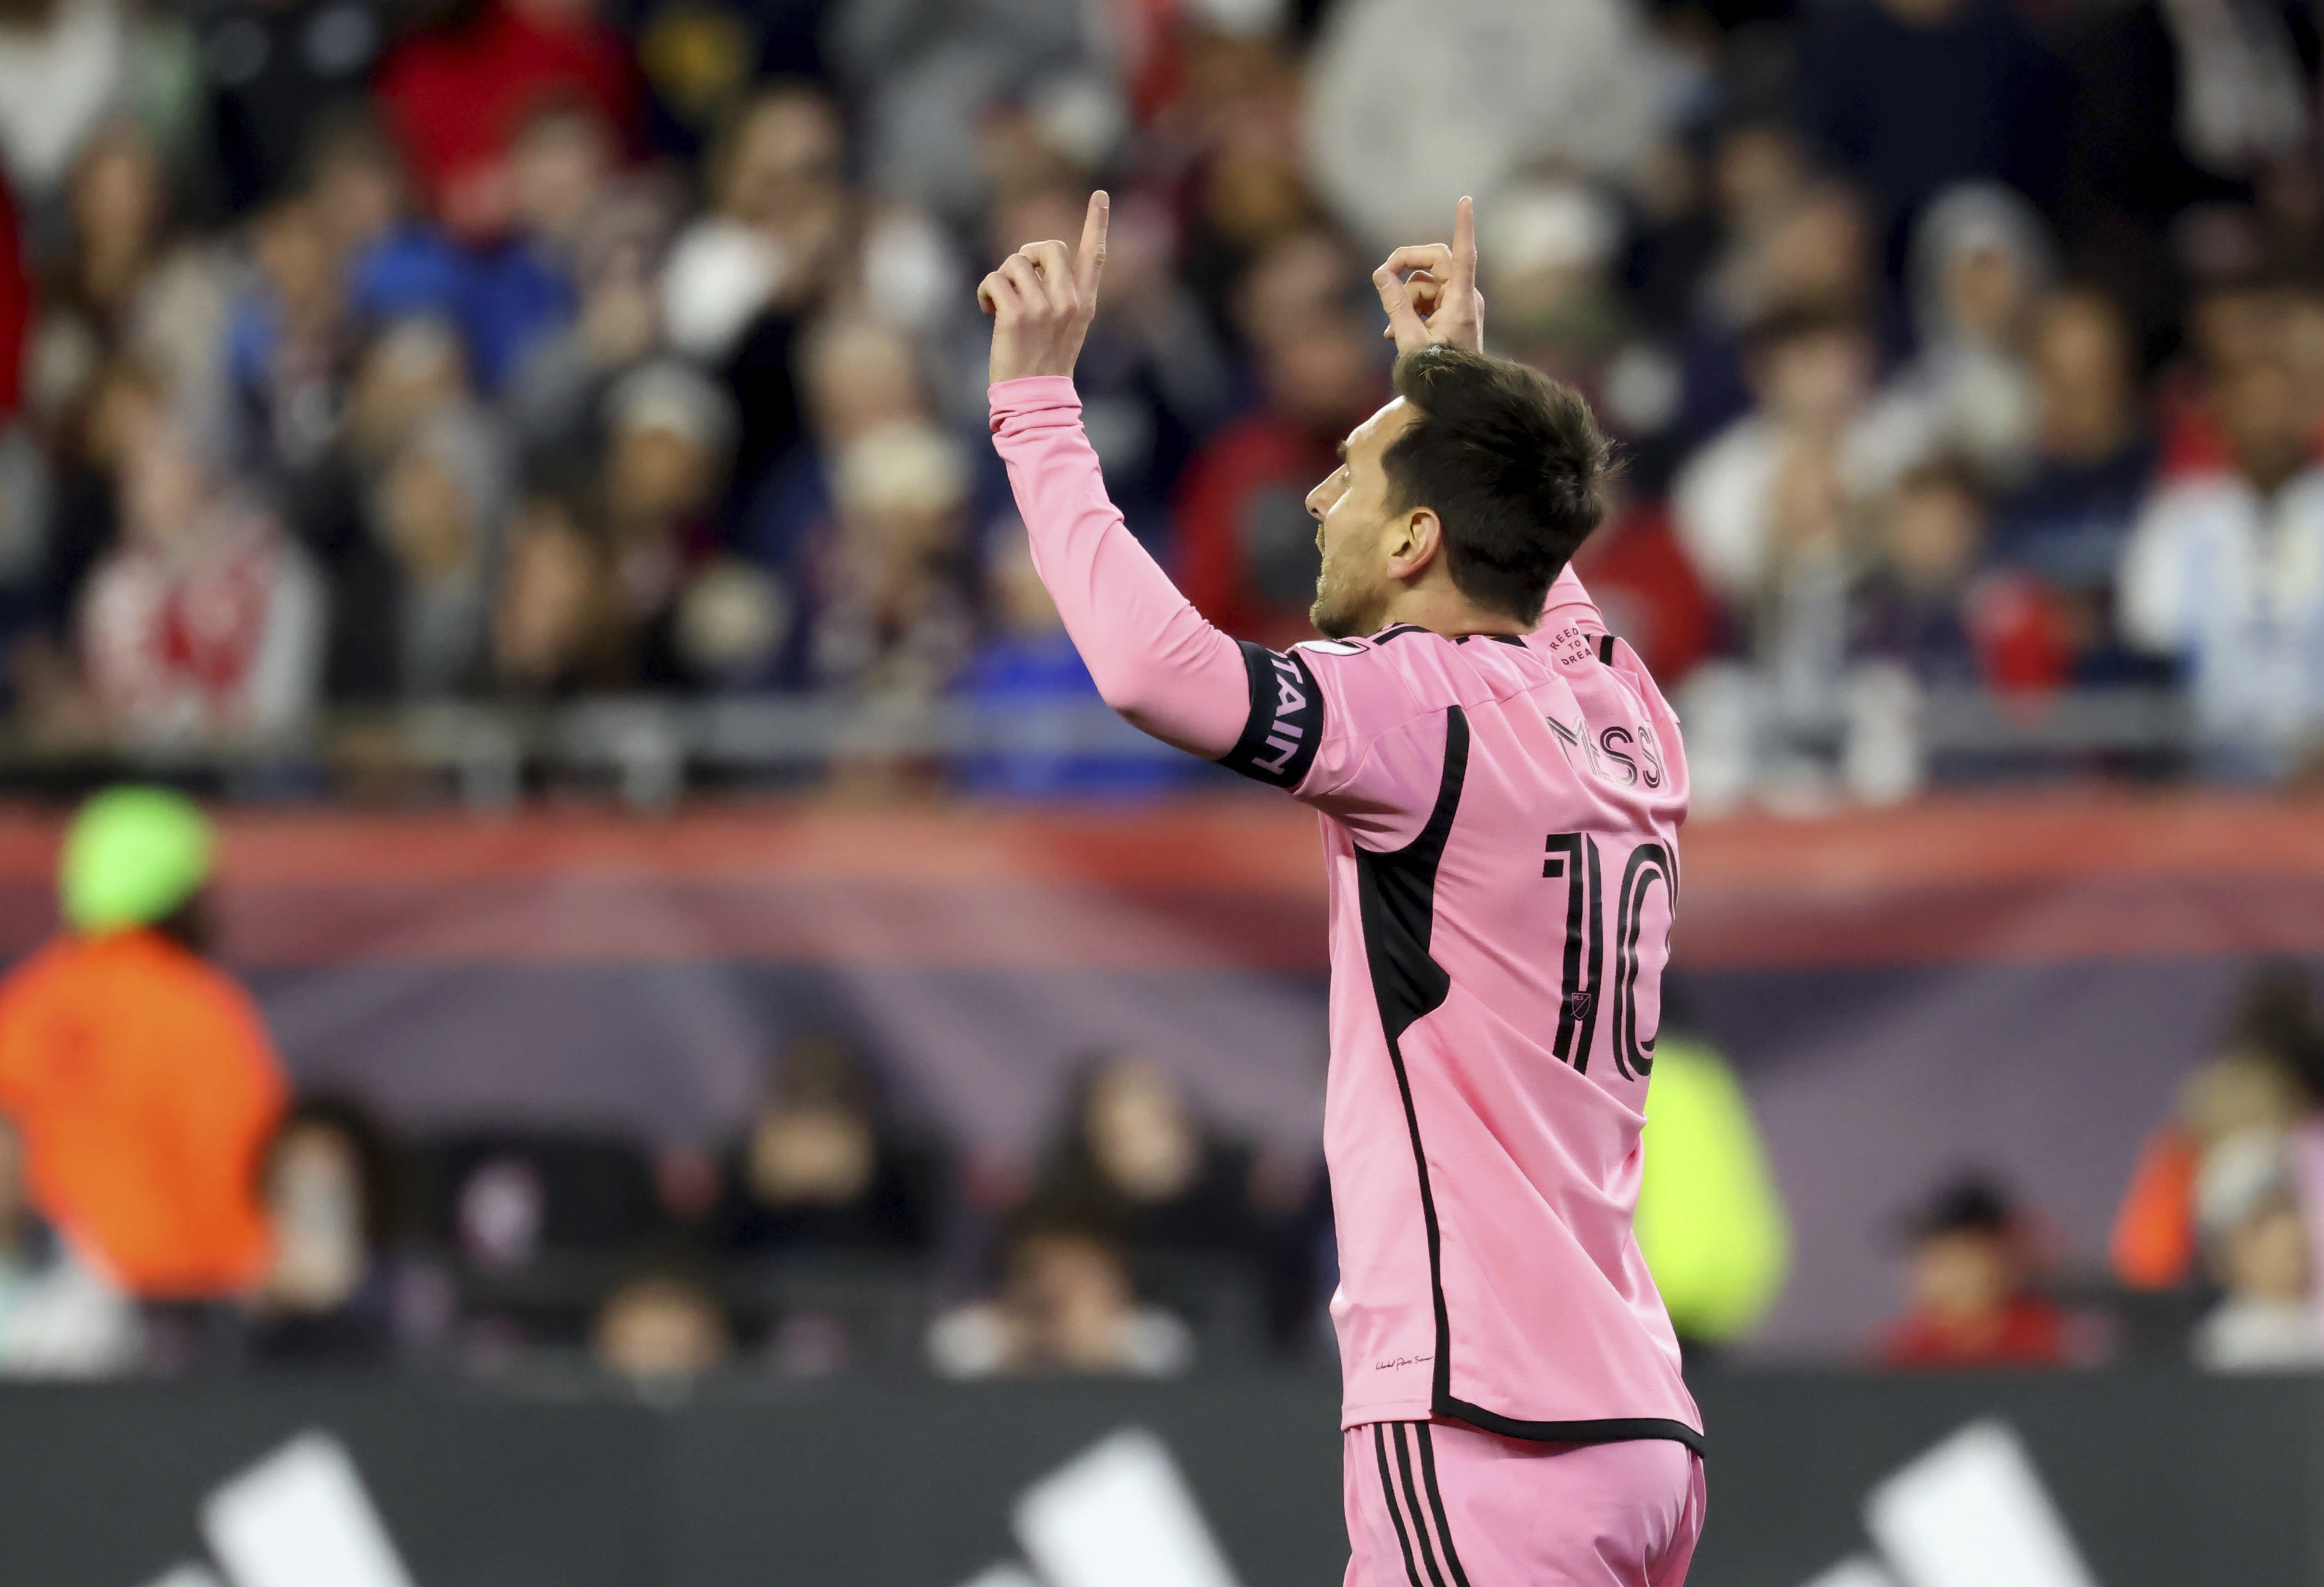 Real Salt Lake loses Cristian Arango, sees 15-match unbeaten run end in 1-0 loss to Galaxy